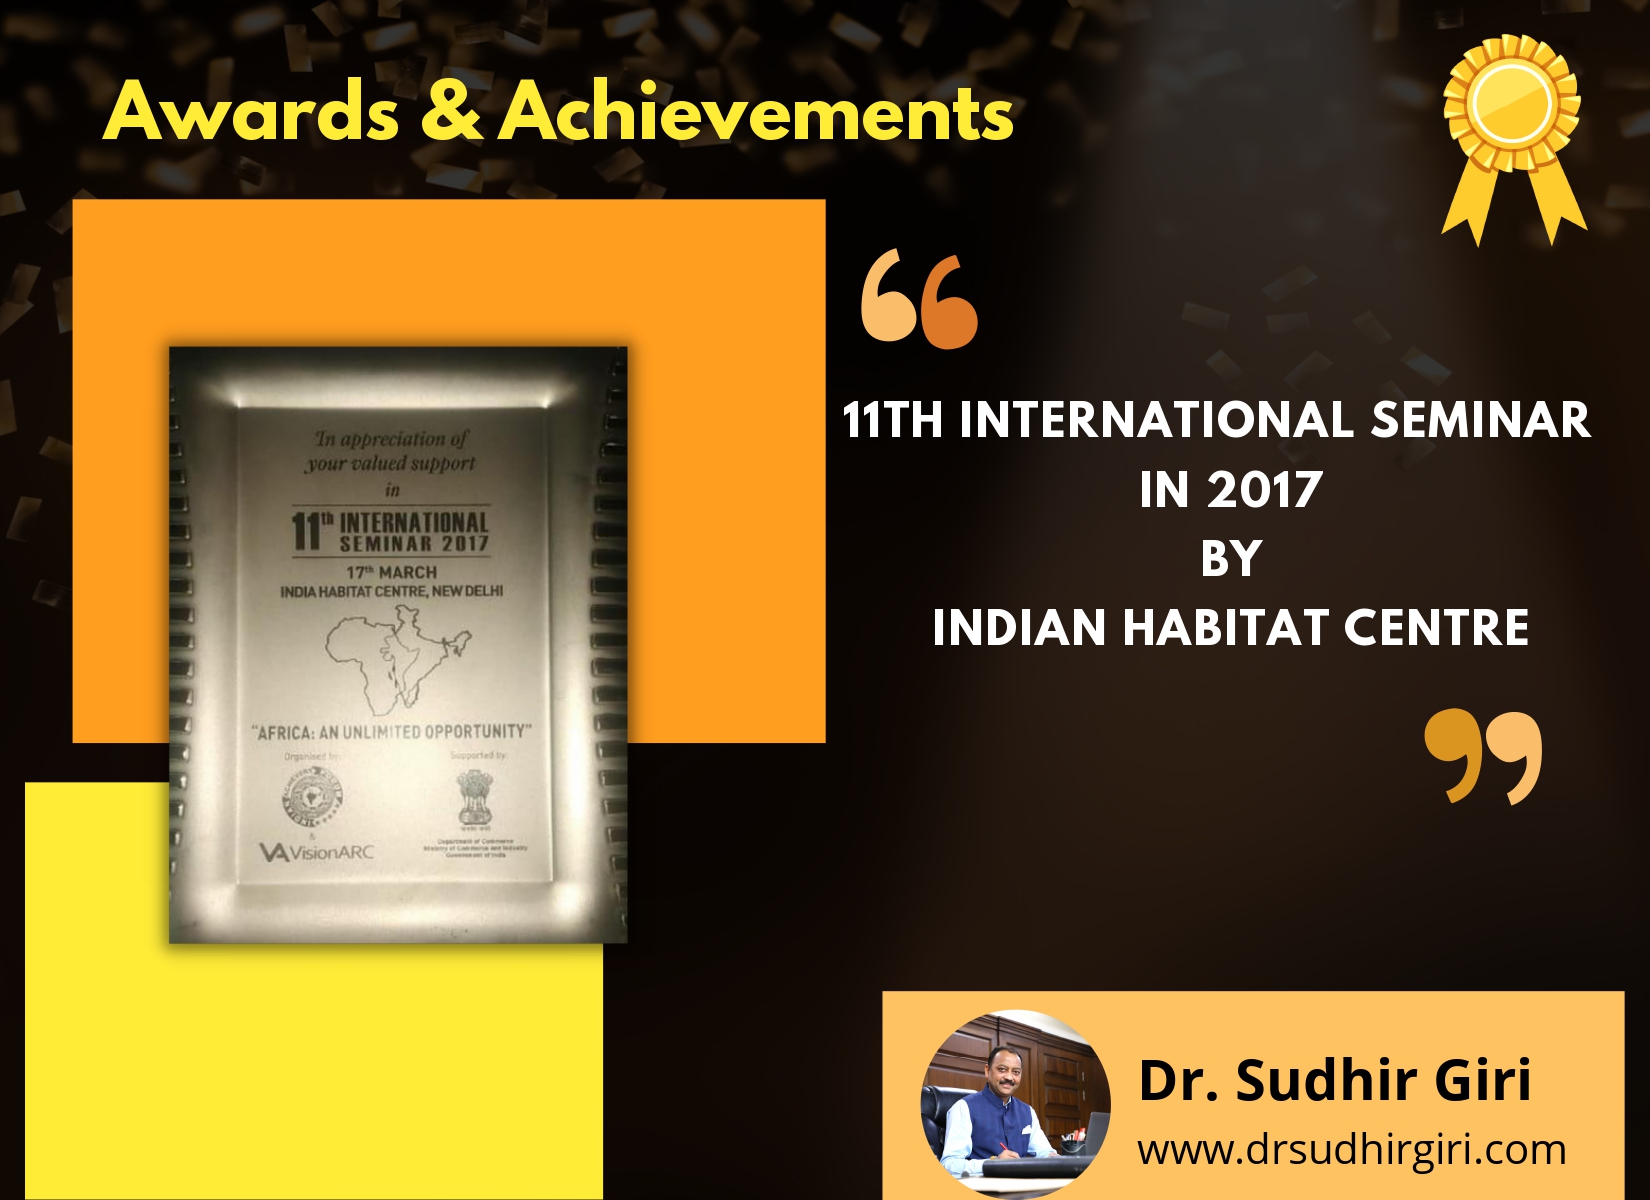 Sudhir Giri - 11th International Seminar in 2017 BY INDIAN HABITAT CENTRE